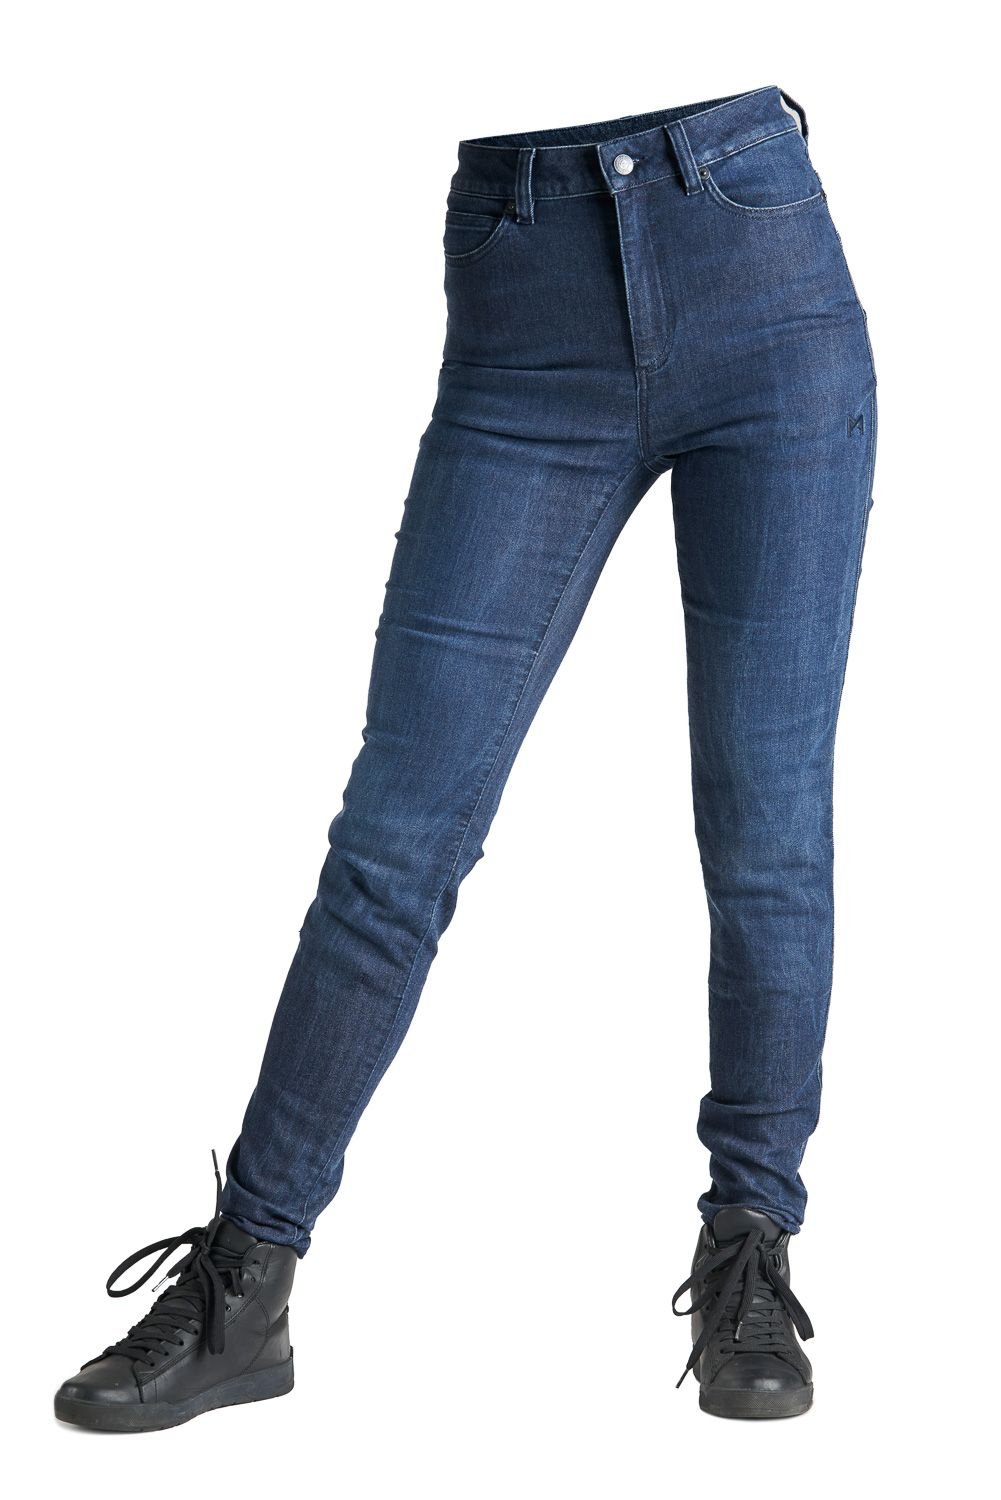 Image of Pando Moto Kusari Cor 02 Women Motorcycle Jeans Skinny-Fit Cordura Talla W32/L32